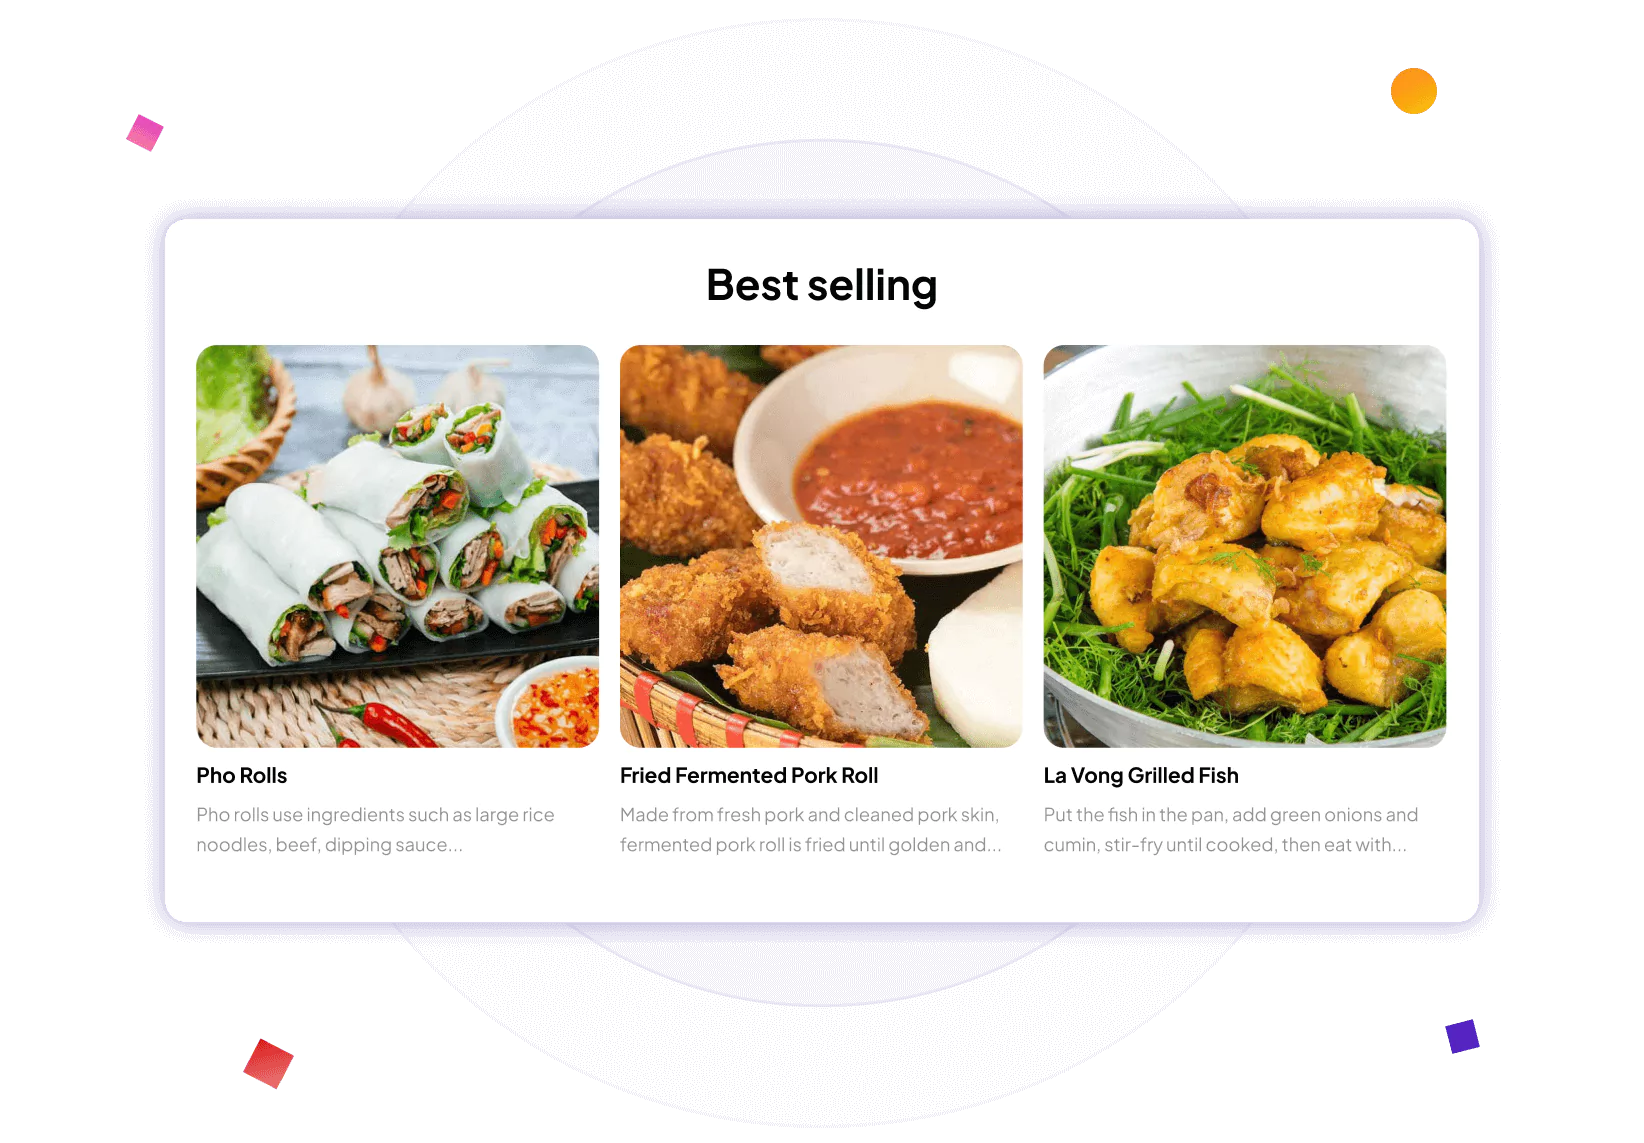 Display best sellers items on
                                    the website